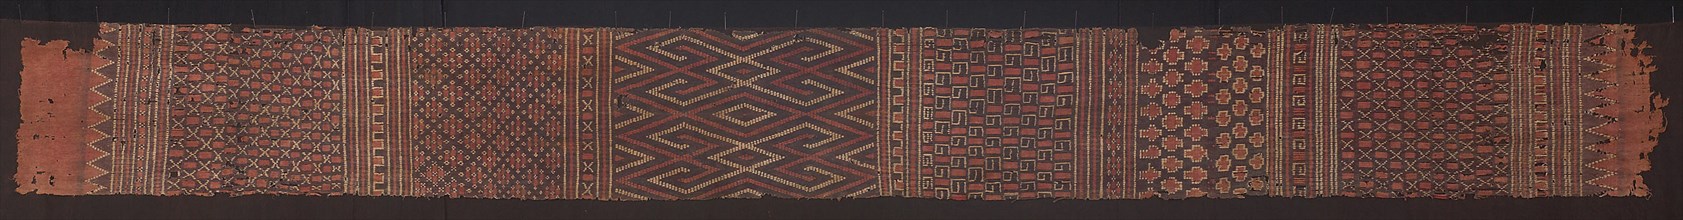 Ceremonial Textile (mbesa tali tau batu or pewo), Indonesia, 18th/19th century. Creator: Unknown.